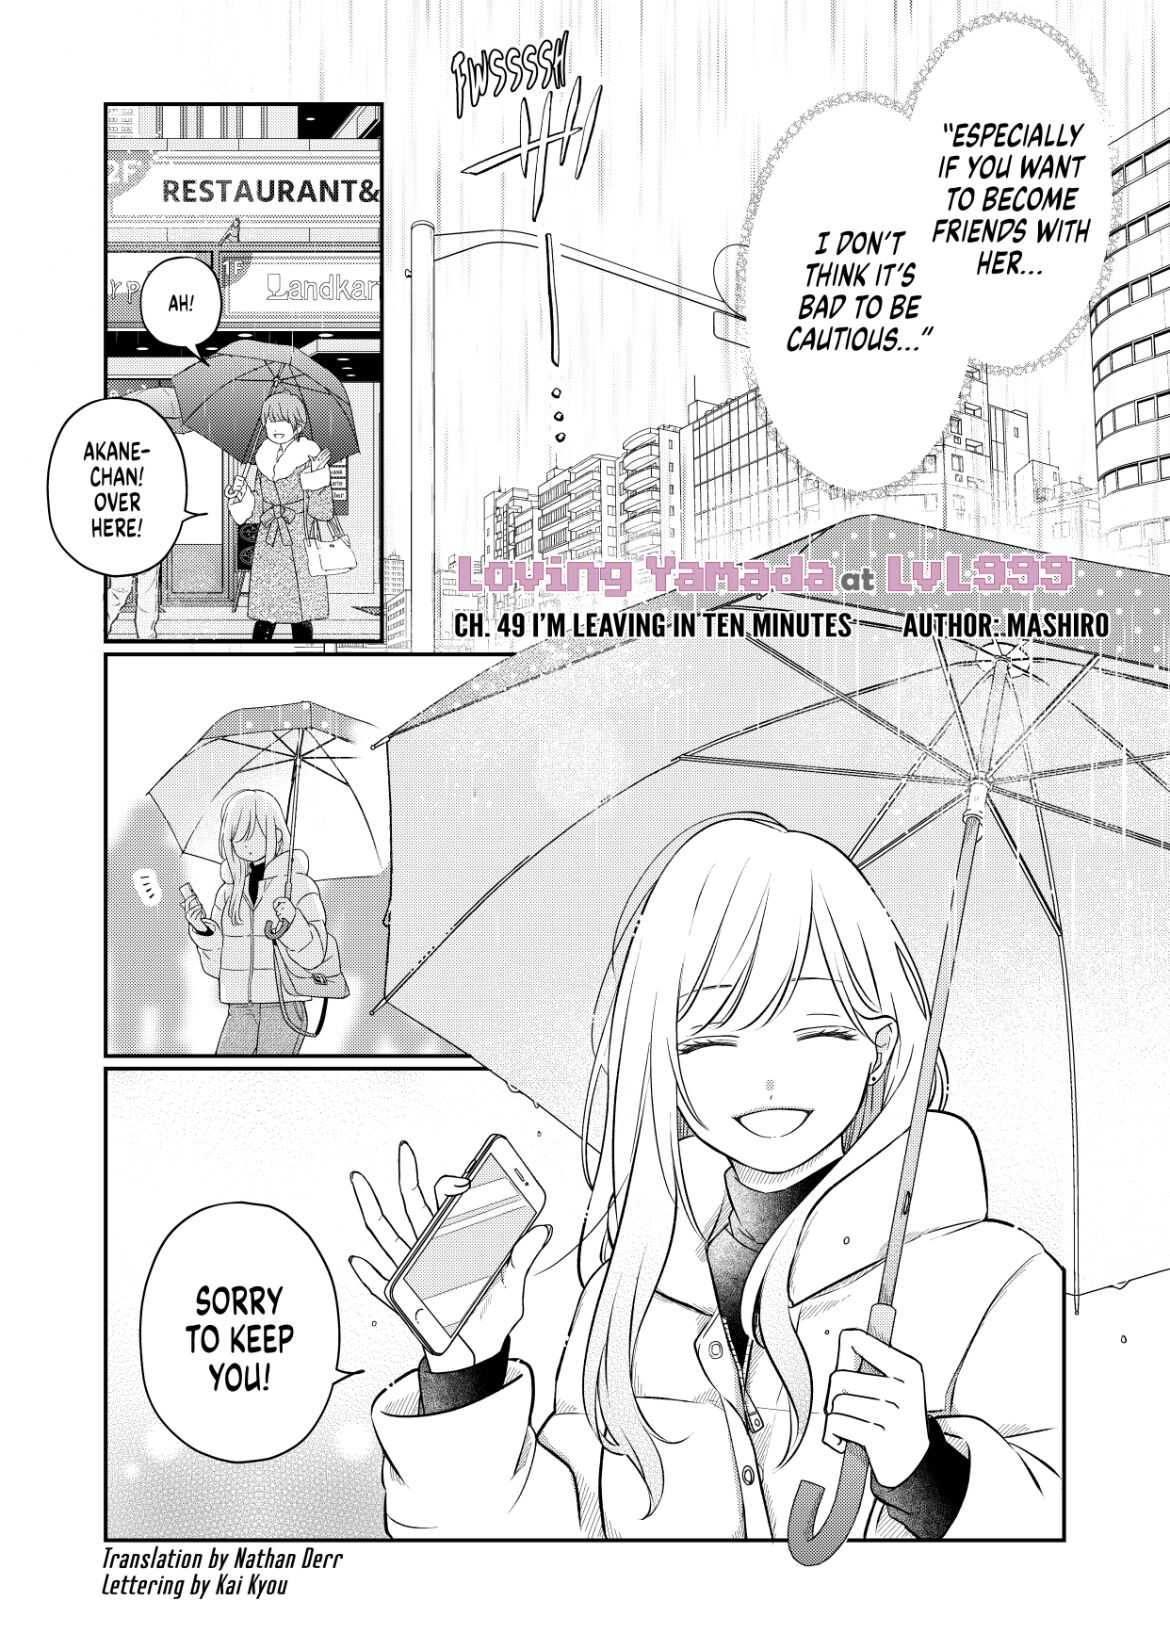 My Love Story with Yamada-kun at Lv999 Manga Volume 1